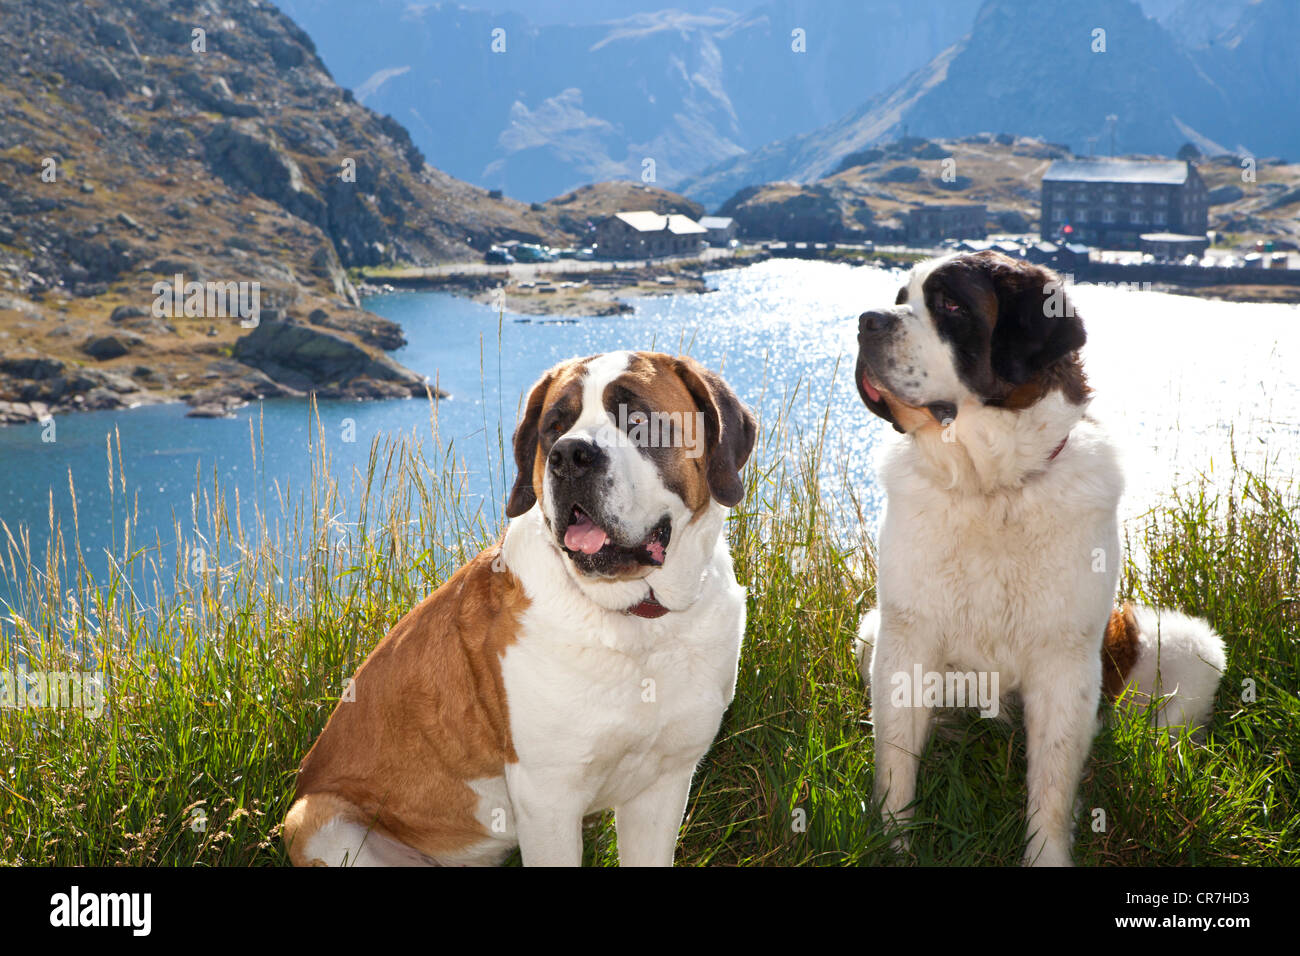 Two St. Bernard dogs of the Barry Foundation sitting on the grass, Great St. Bernard Pass, Valais, Switzerland, Europe Stock Photo